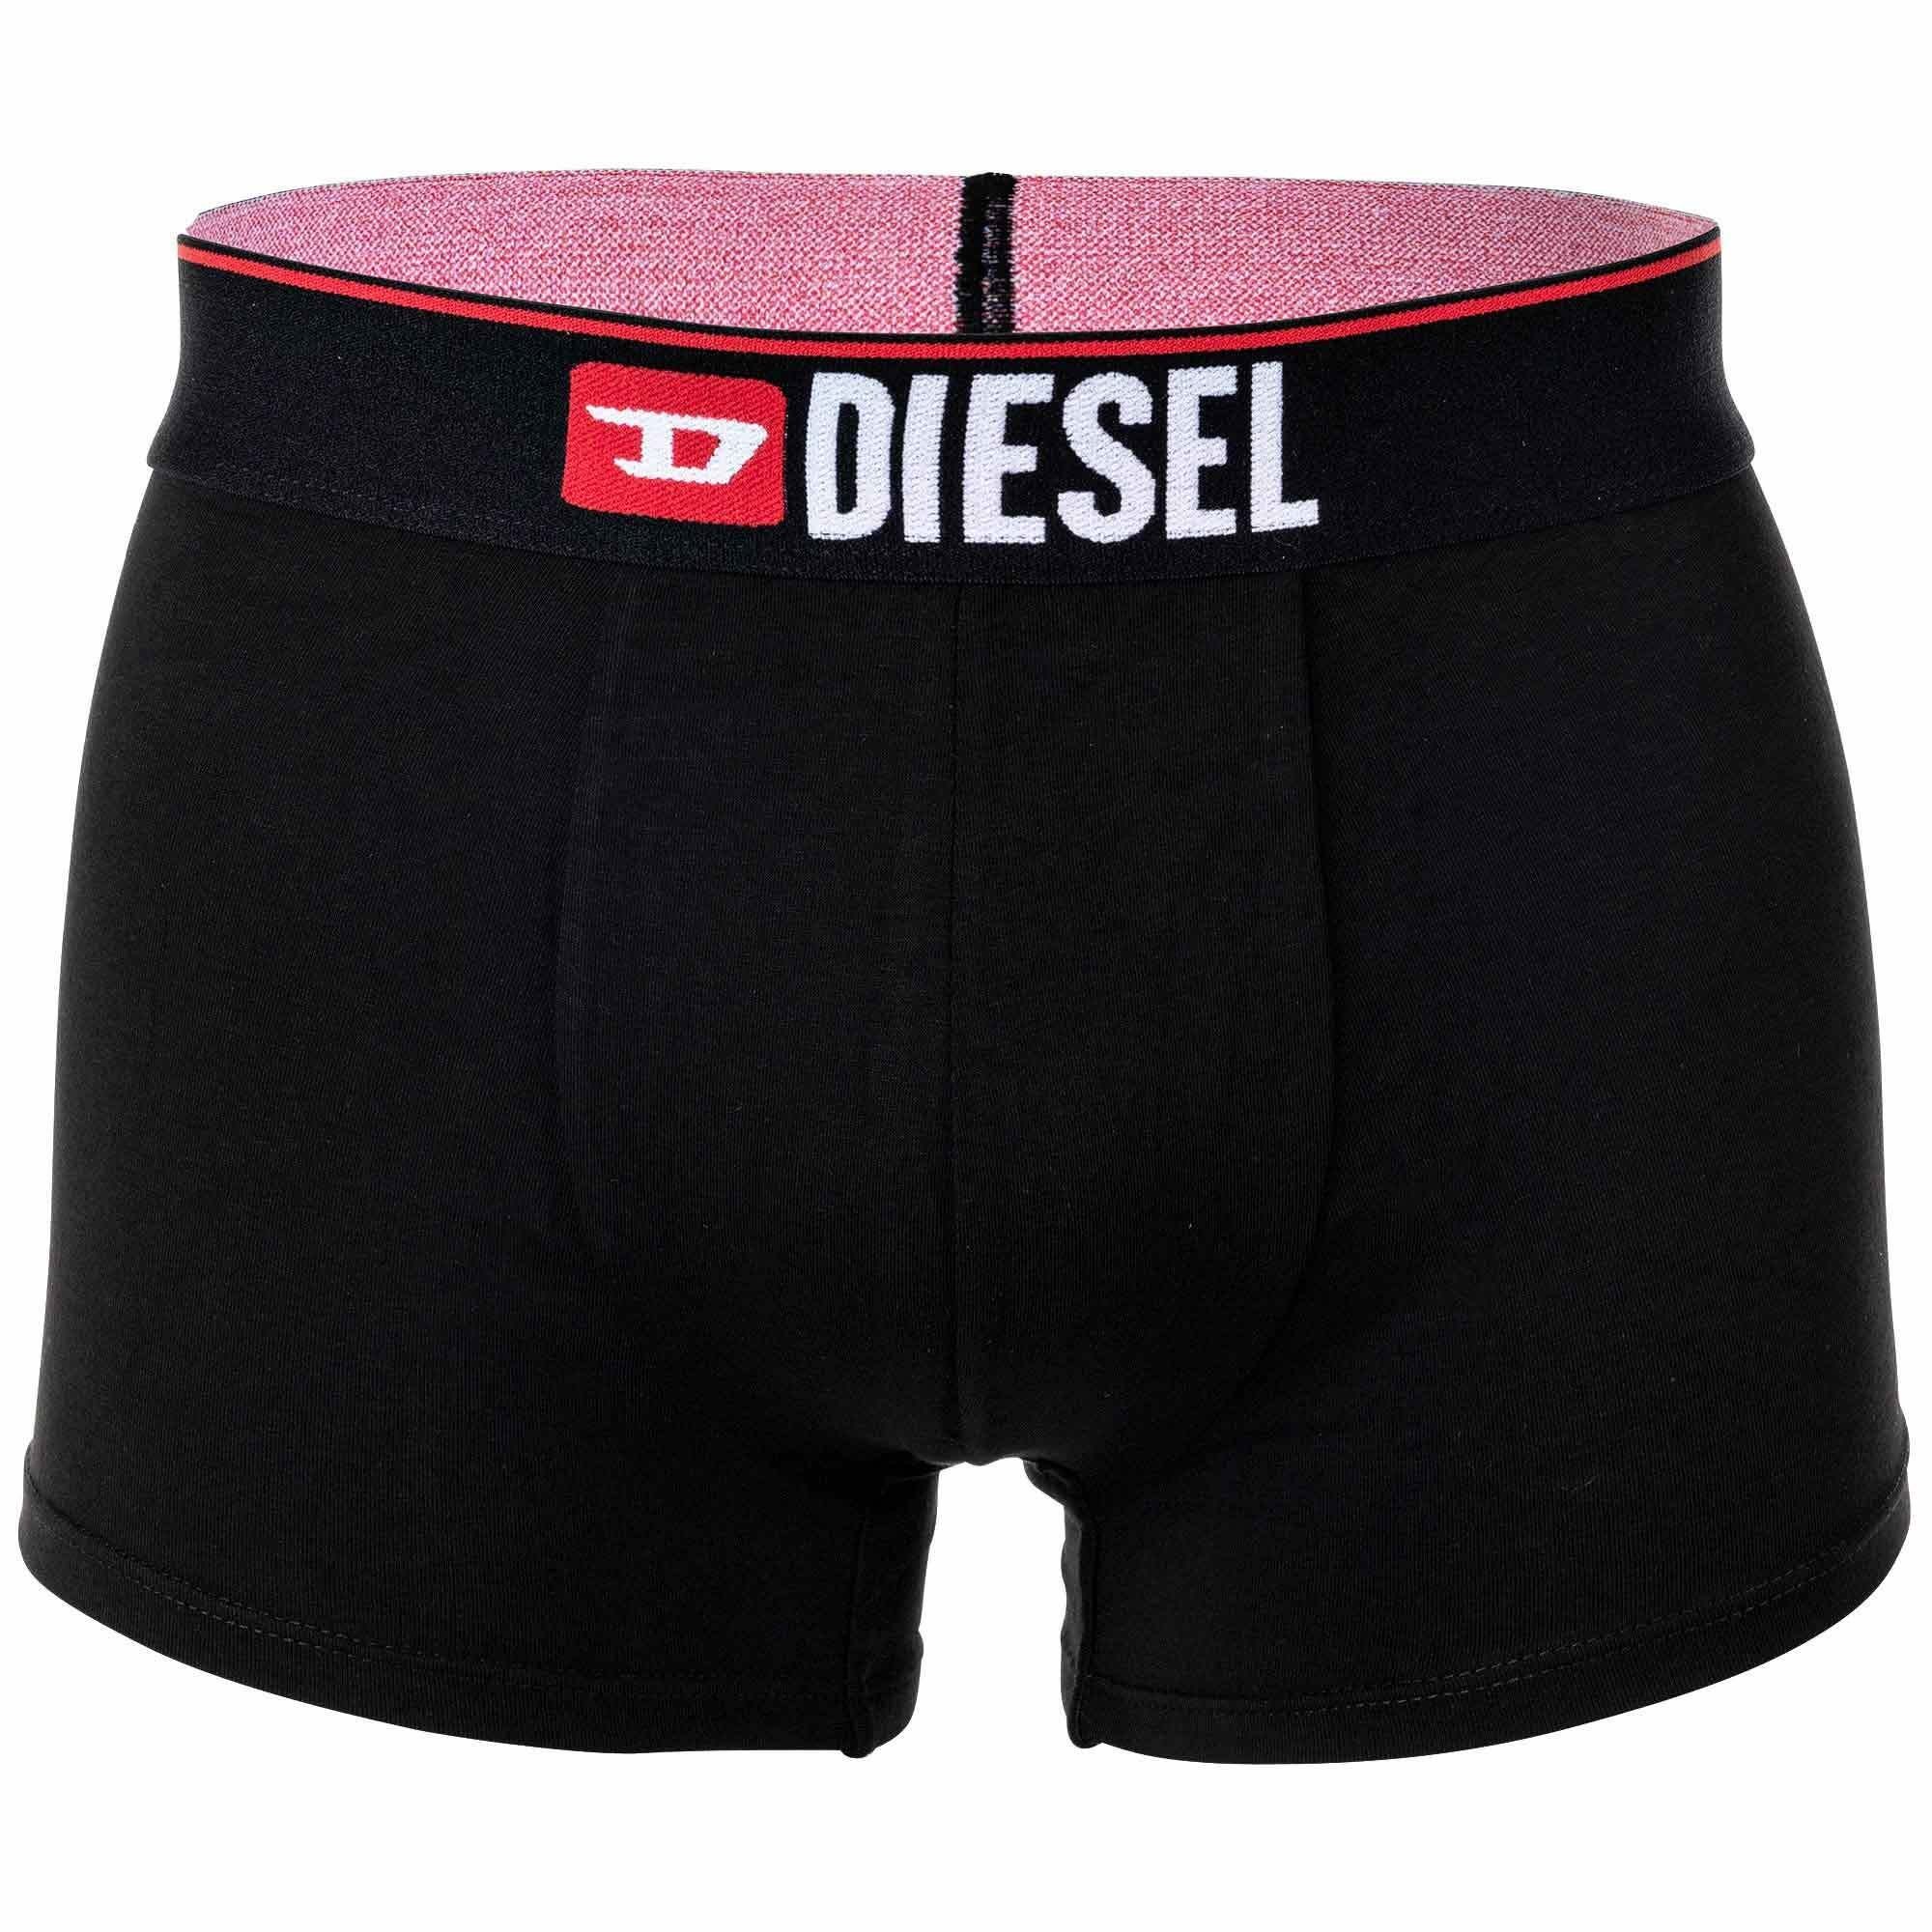 Diesel Boxer 3er Pack - Herren Boxershorts